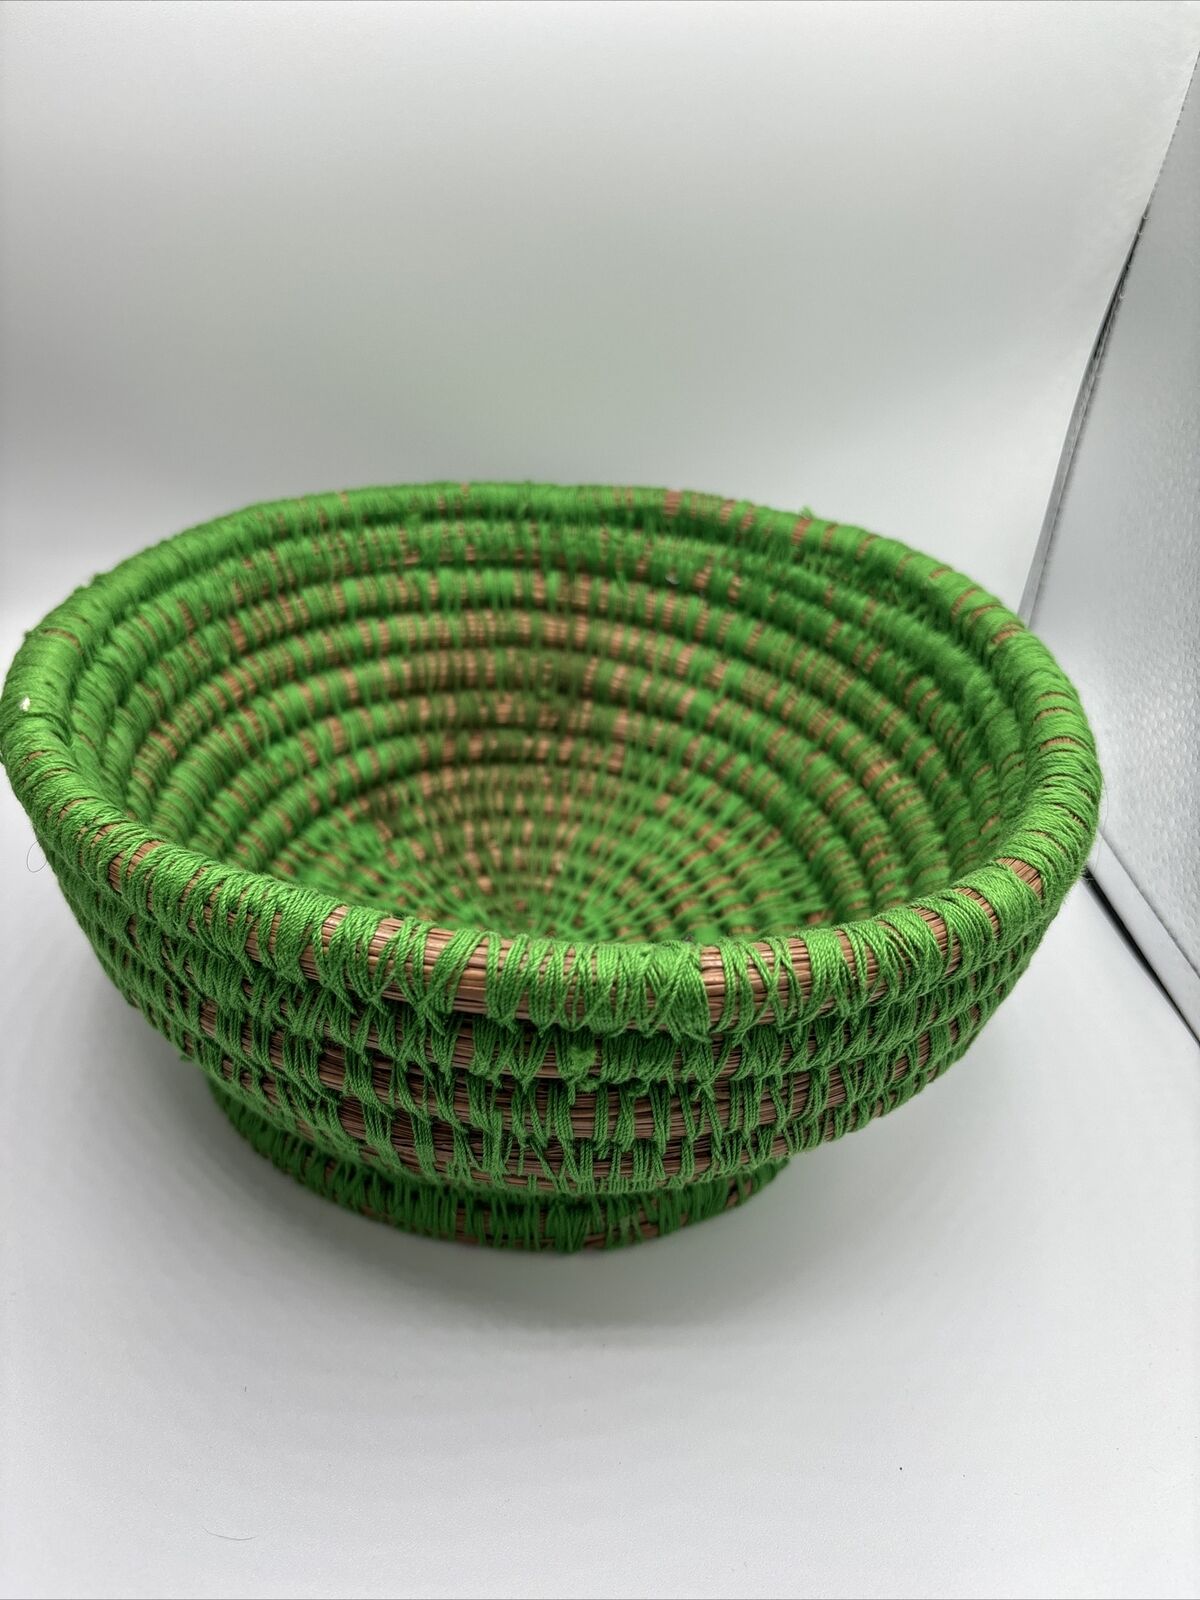 Handmade 10” Southern African Sea Grass Woven Basket Boho Poverty Art Green VTG